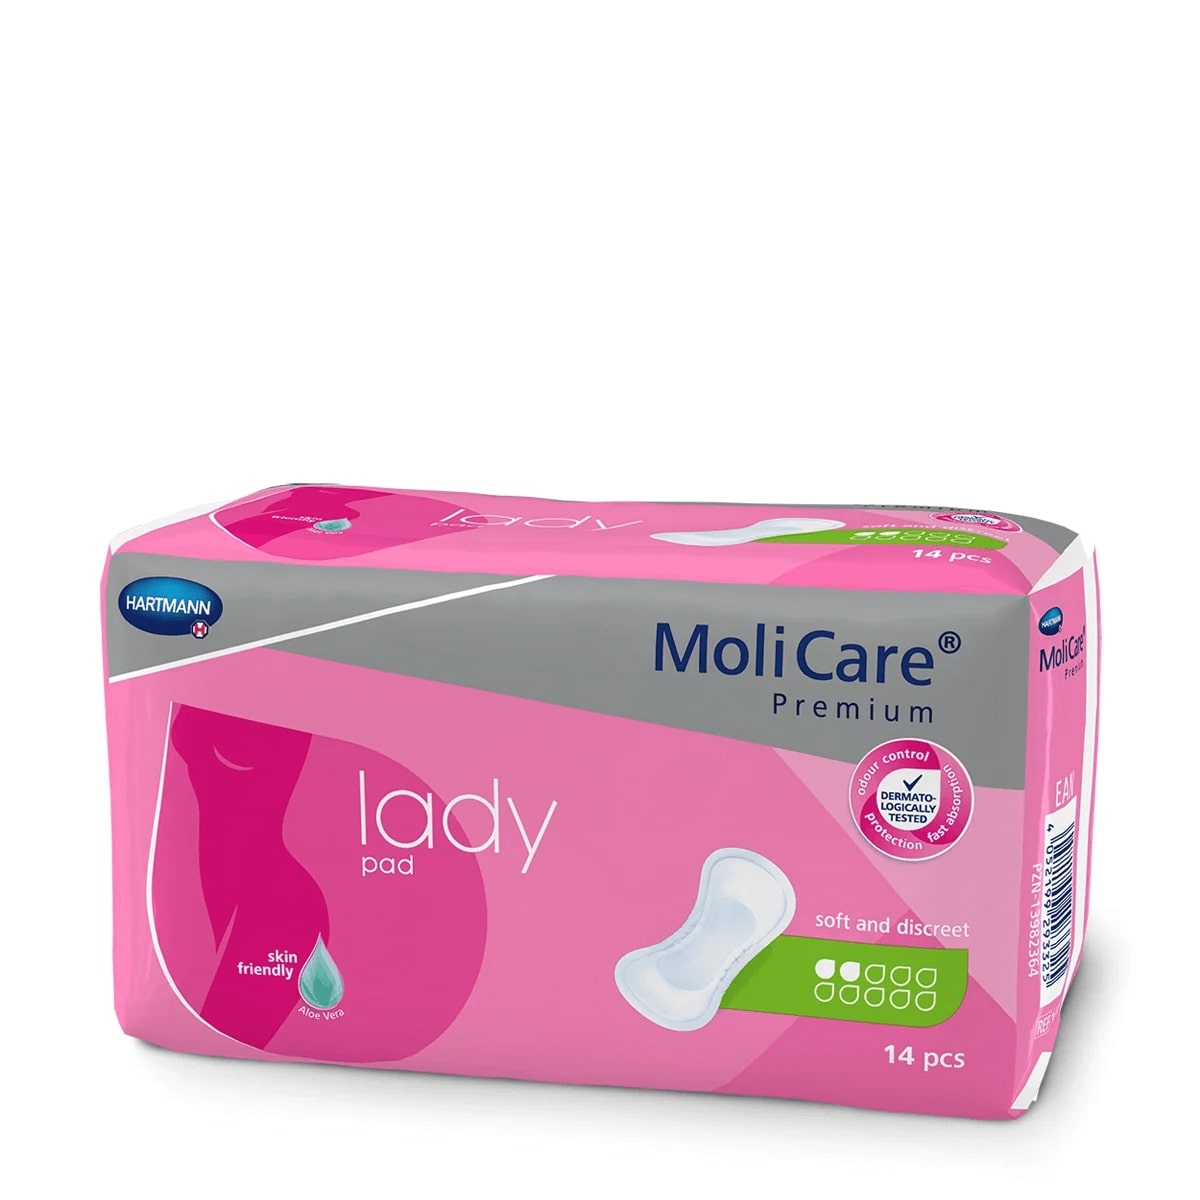 MoliCare®Premium lady pad